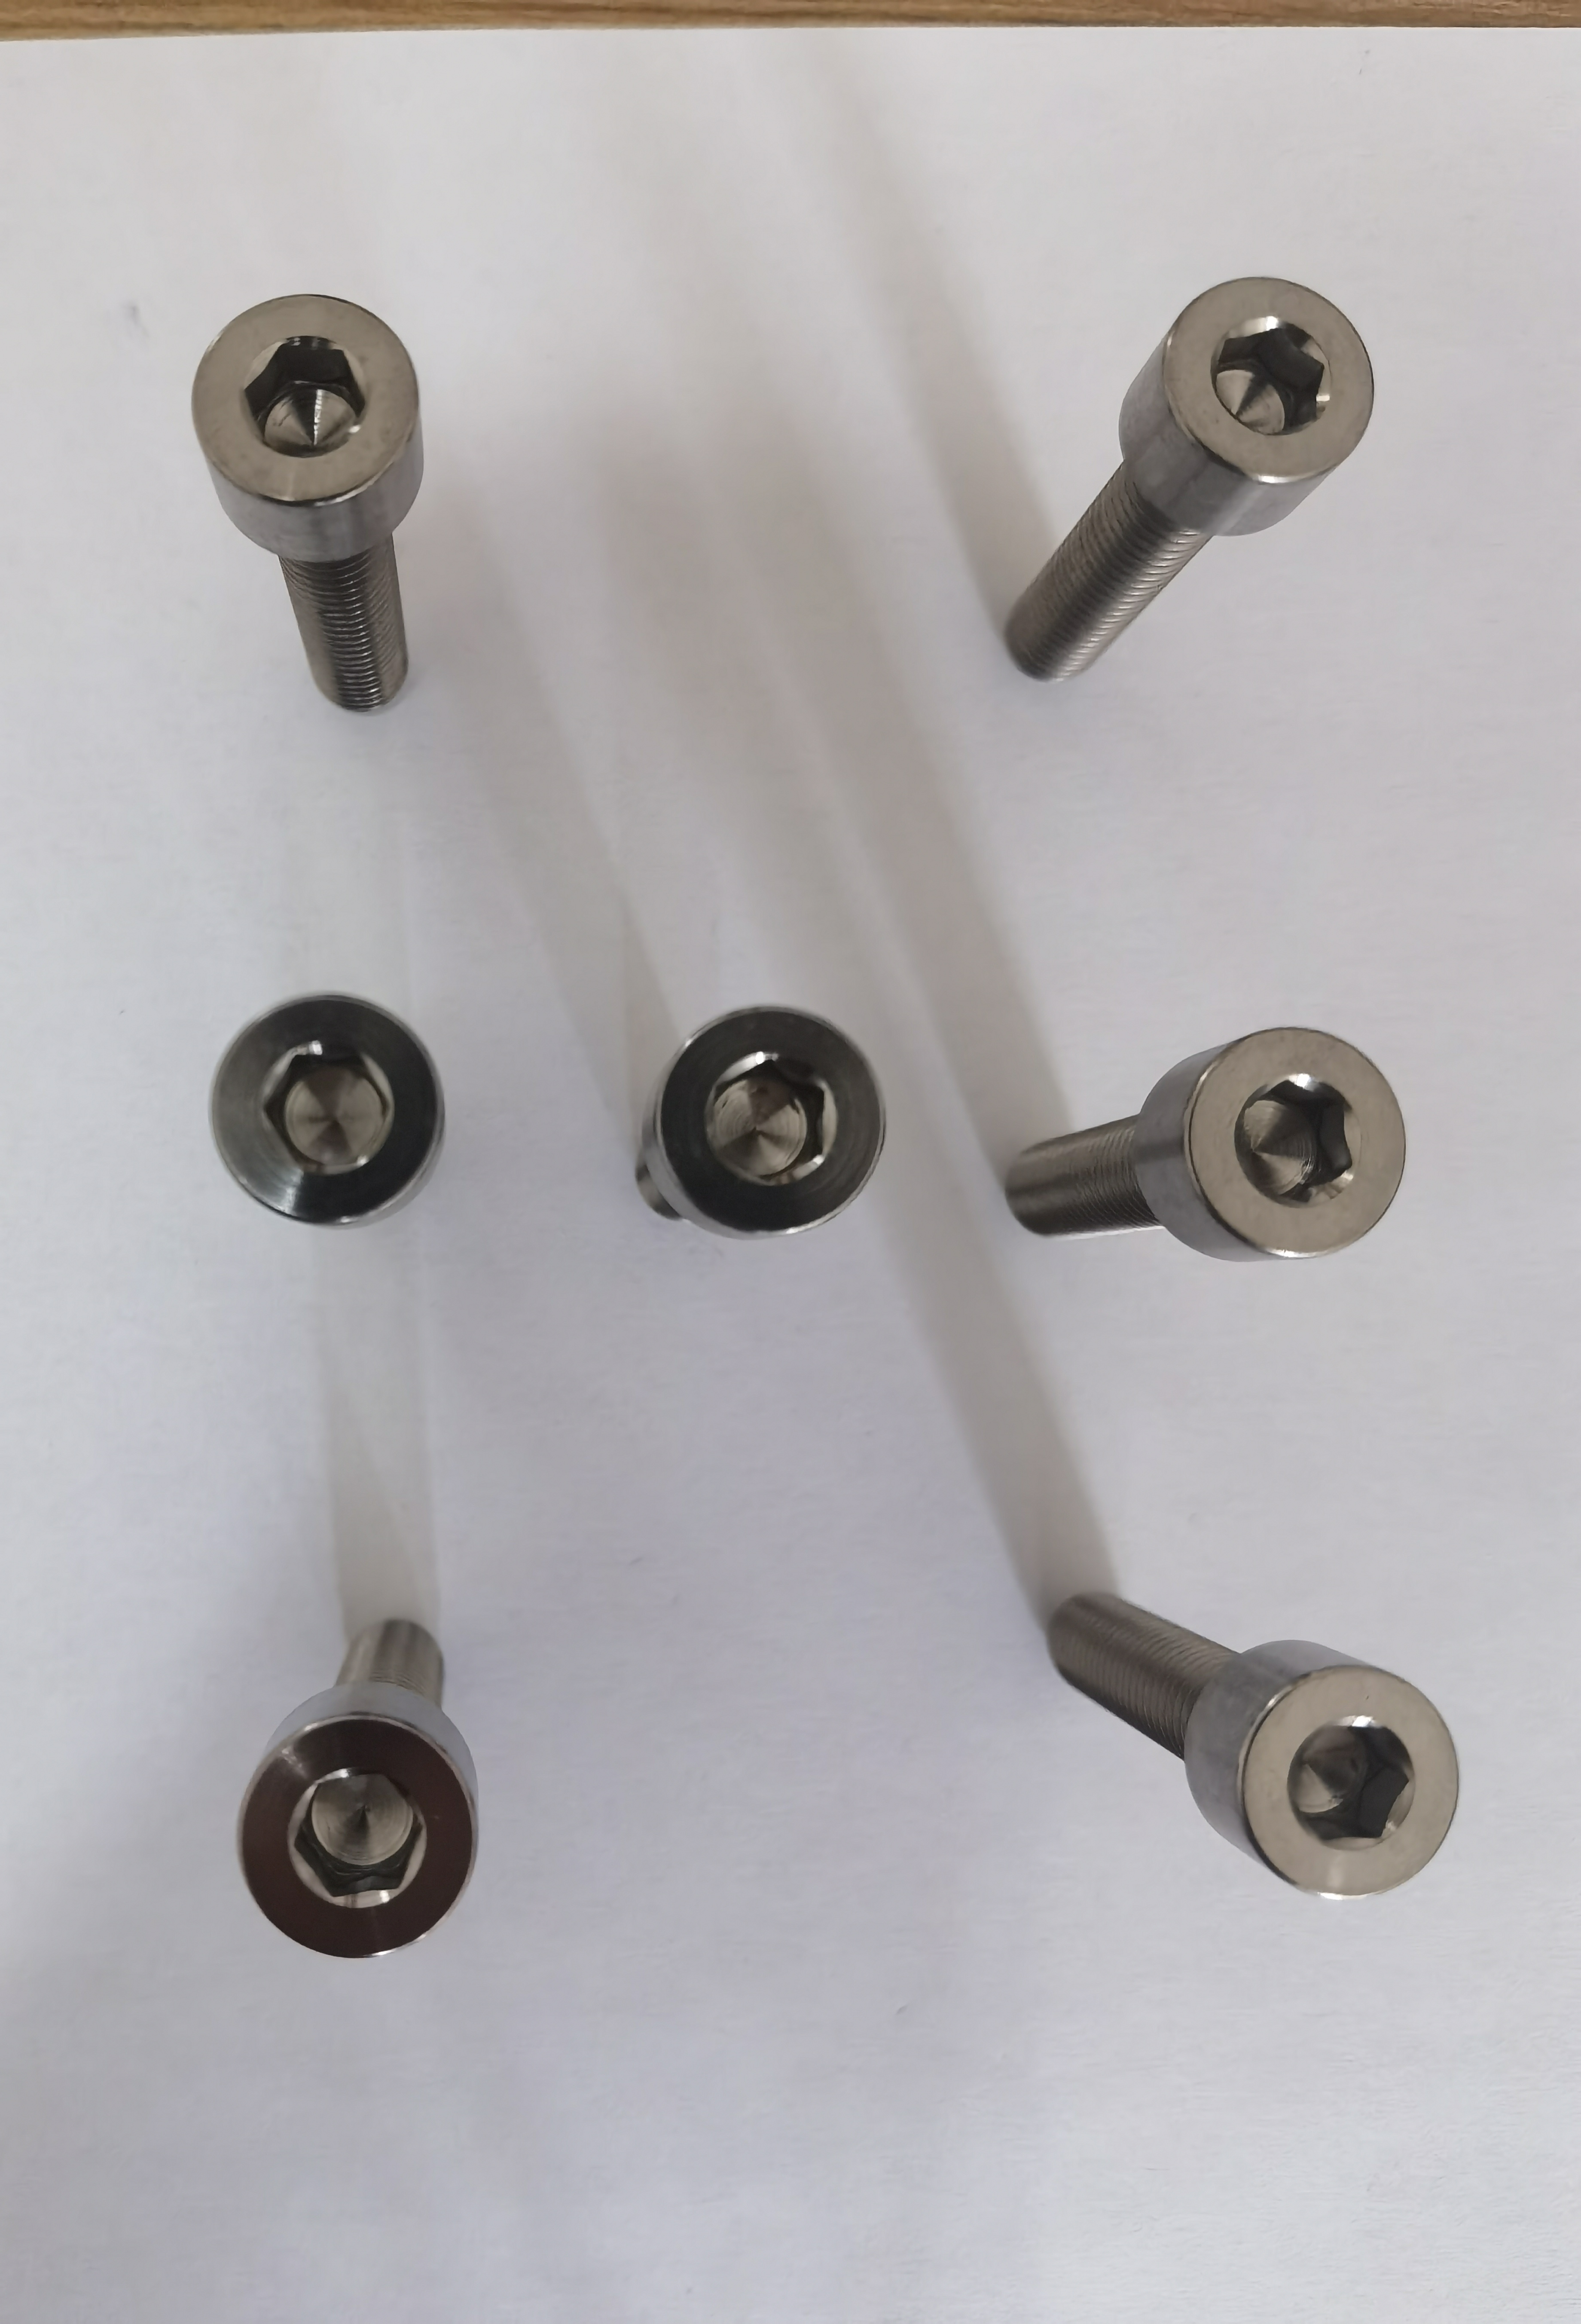  Titanium Hexagon Socket Head Cap Screws with Low Head DIN7984 GR5 GR2